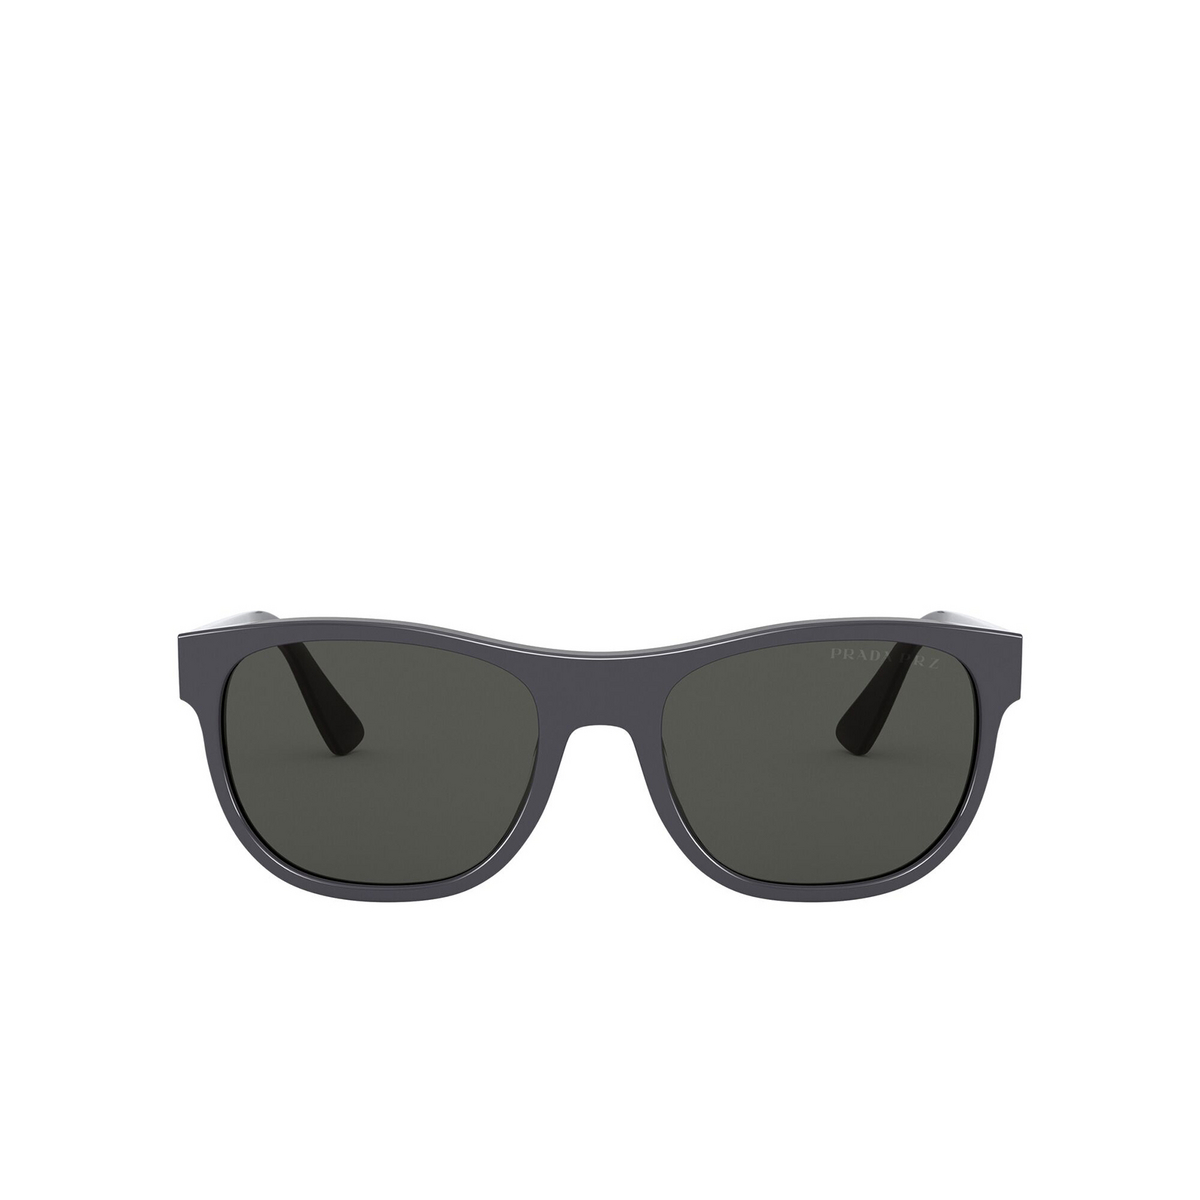 Prada® Square Sunglasses: Heritage PR 04XS color Grey 5166M2 - front view.